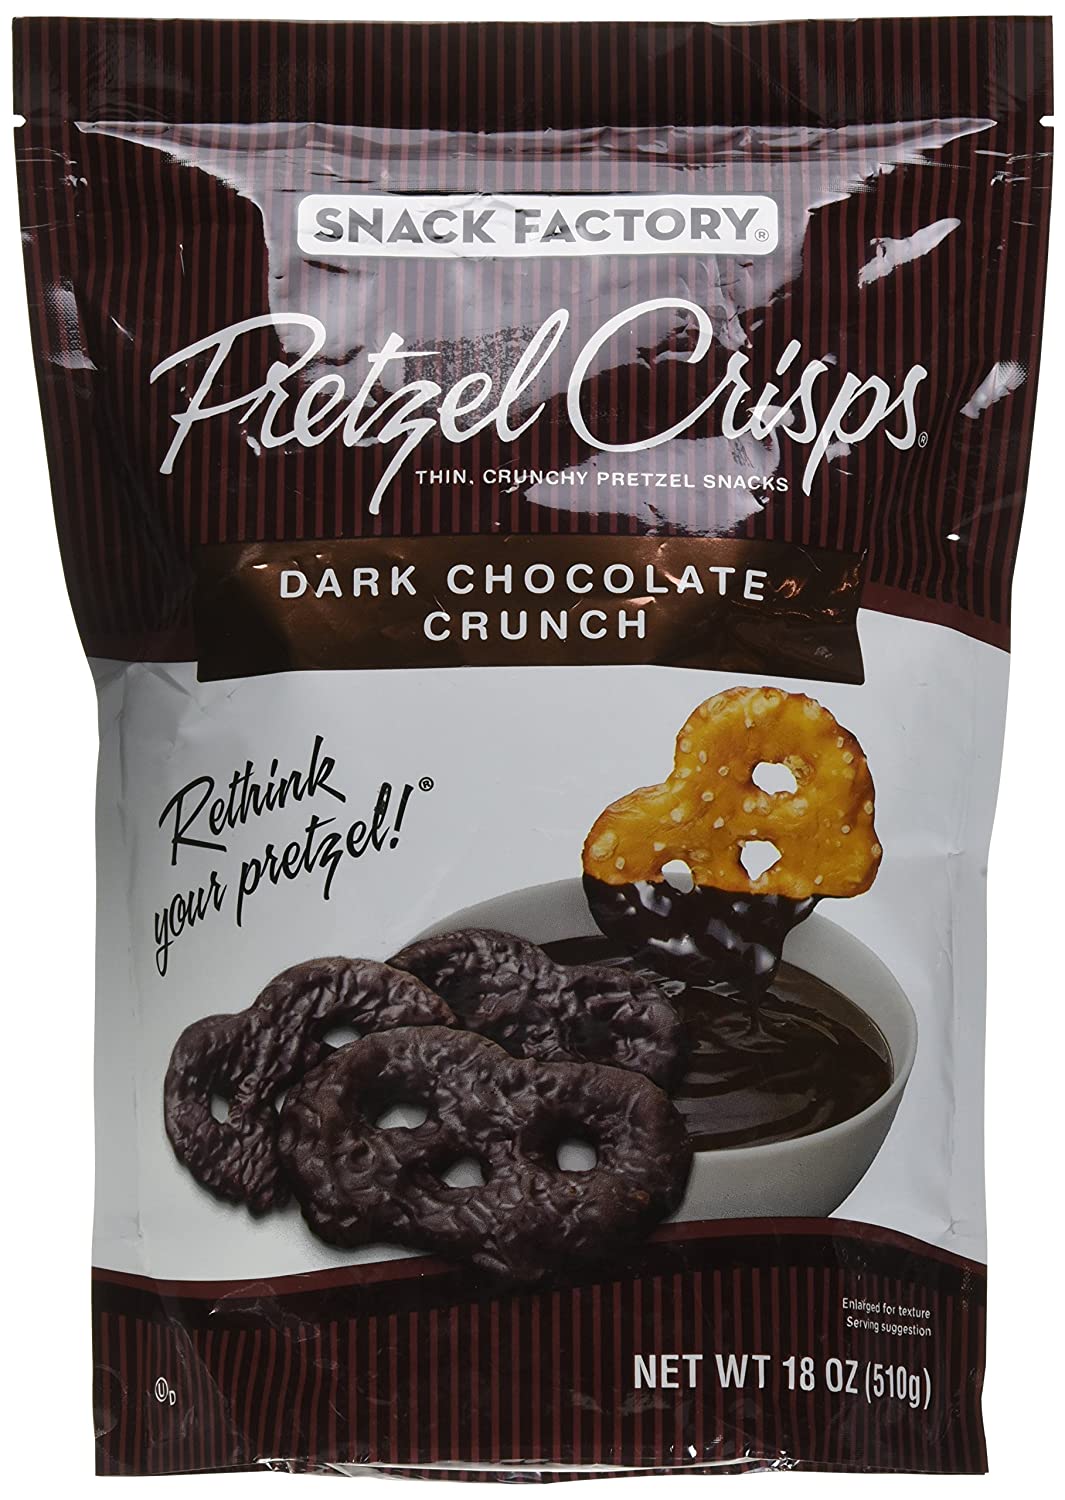 Snack Factory Crunchy Chocolate-Covered Pretzel Crisp Snacks